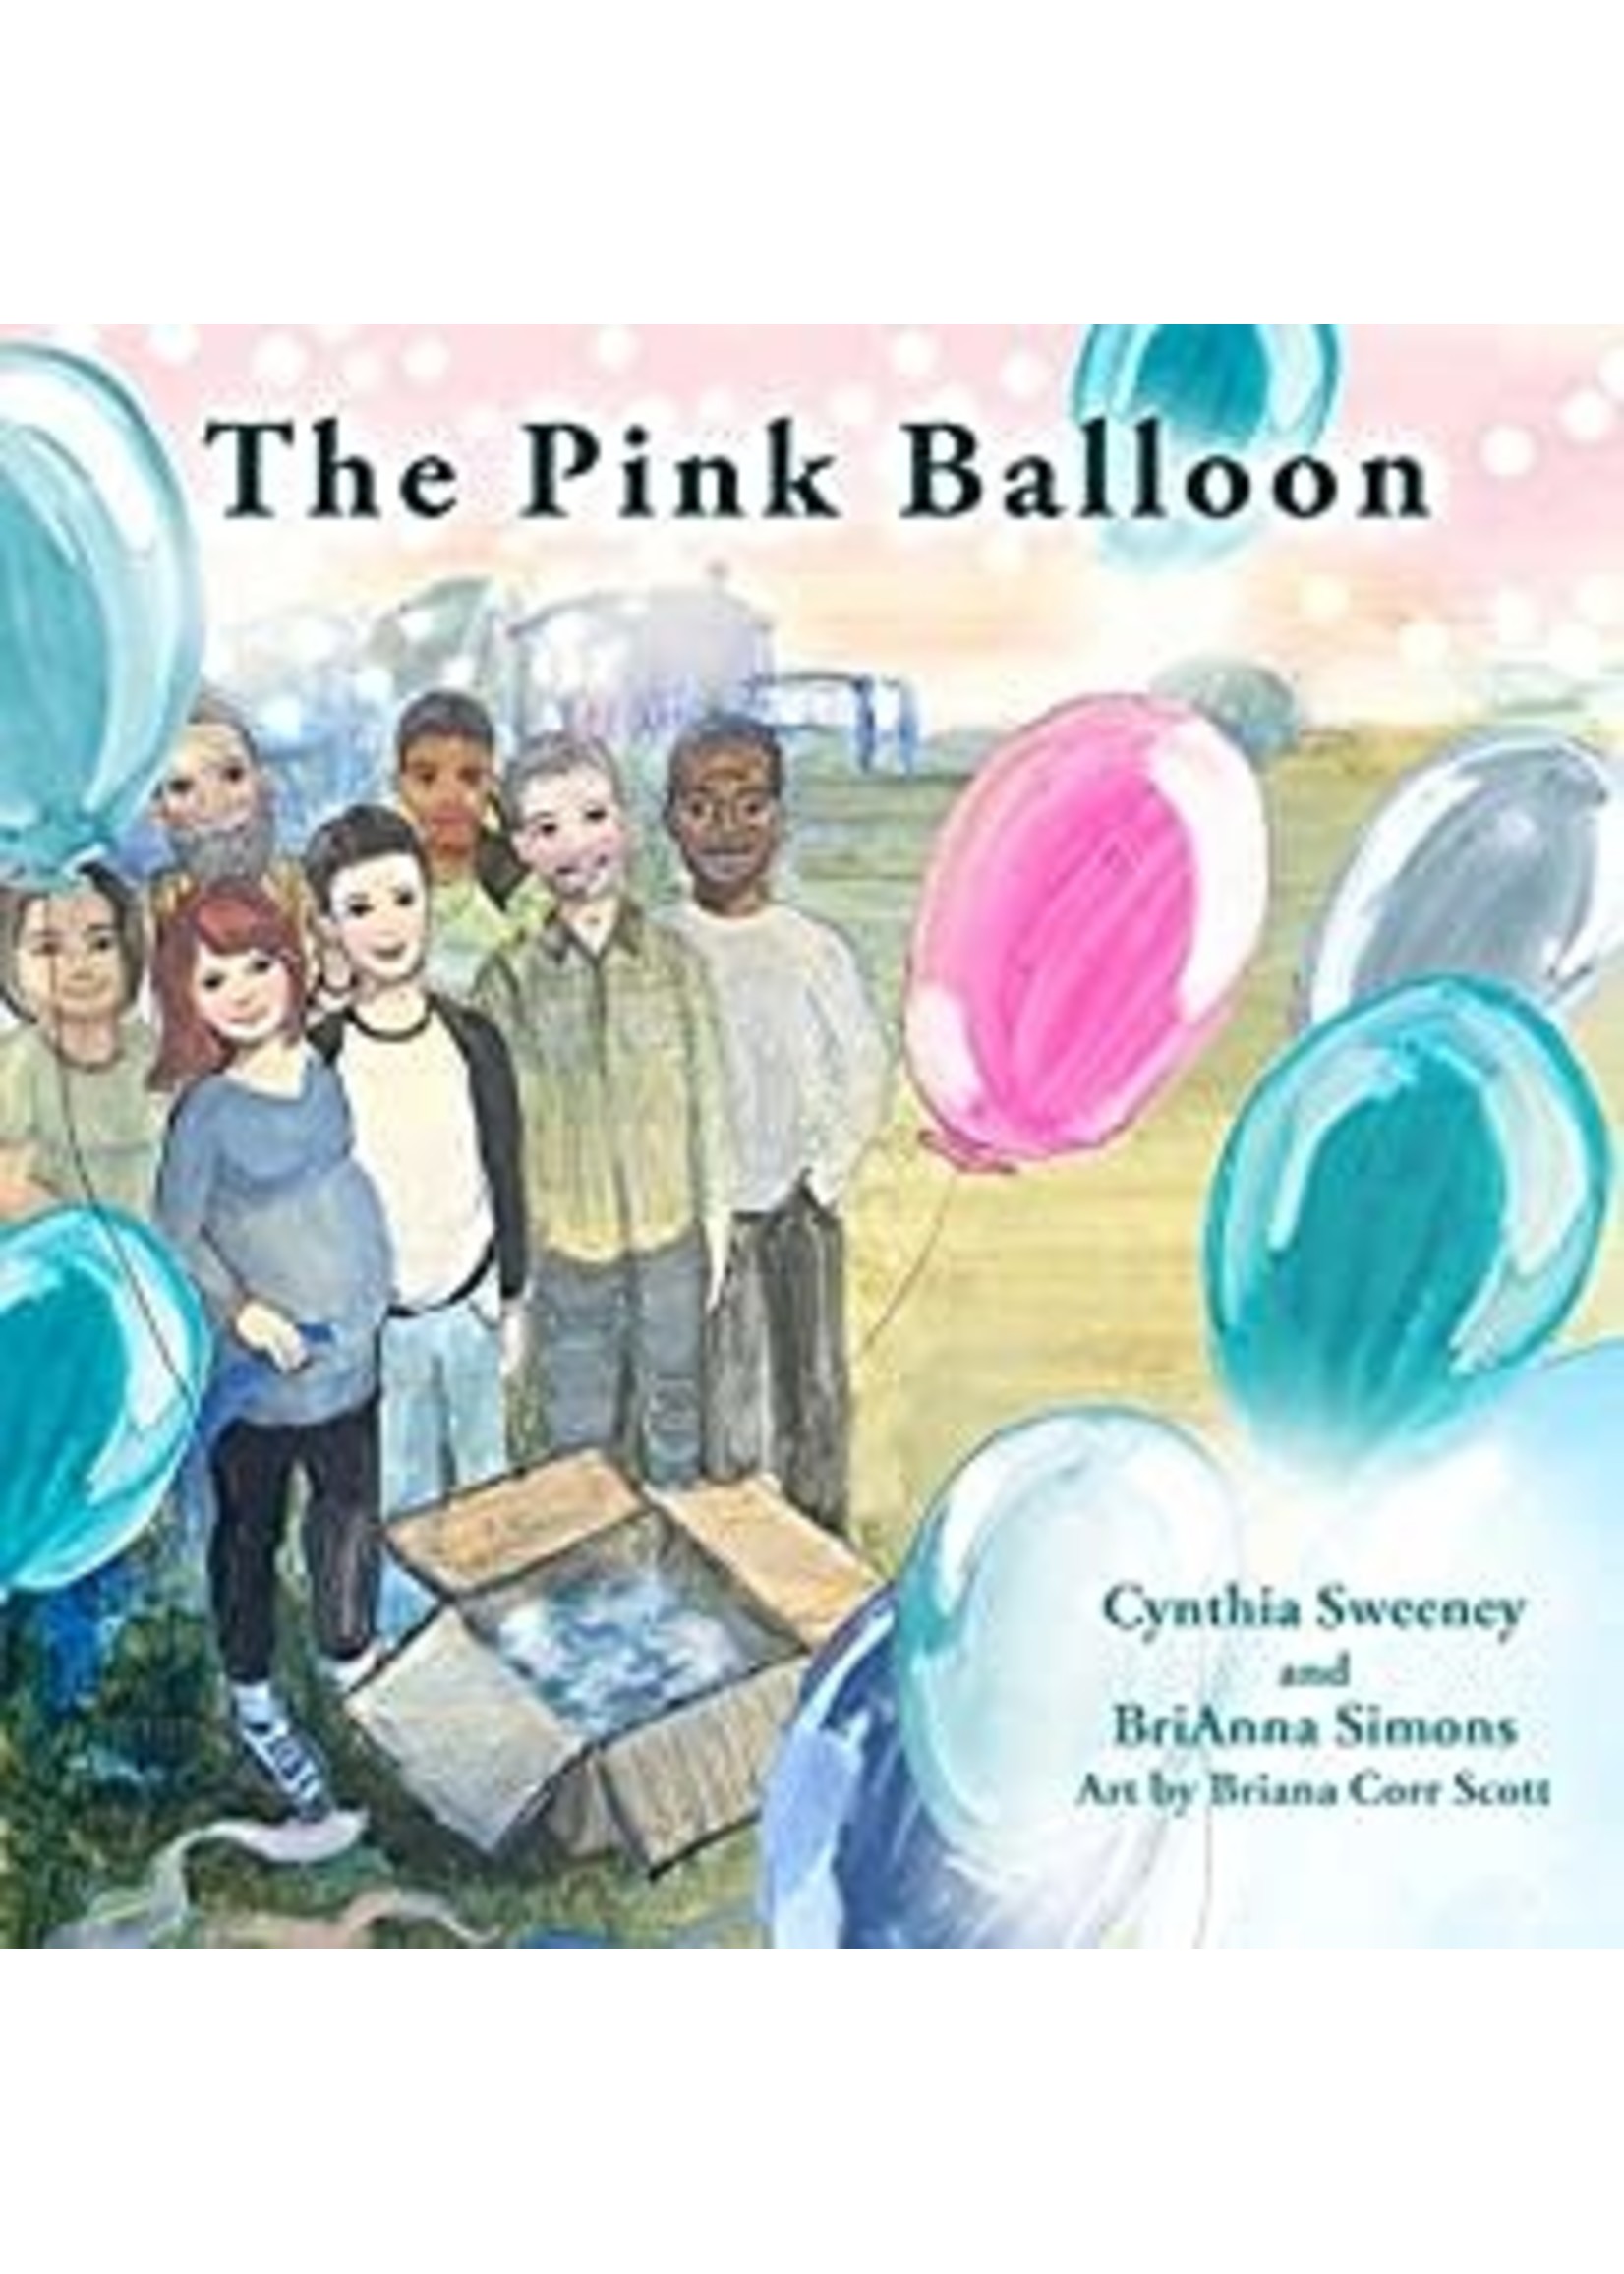 The Pink Balloon by Cynthia Sweeney, BriAnna Simons